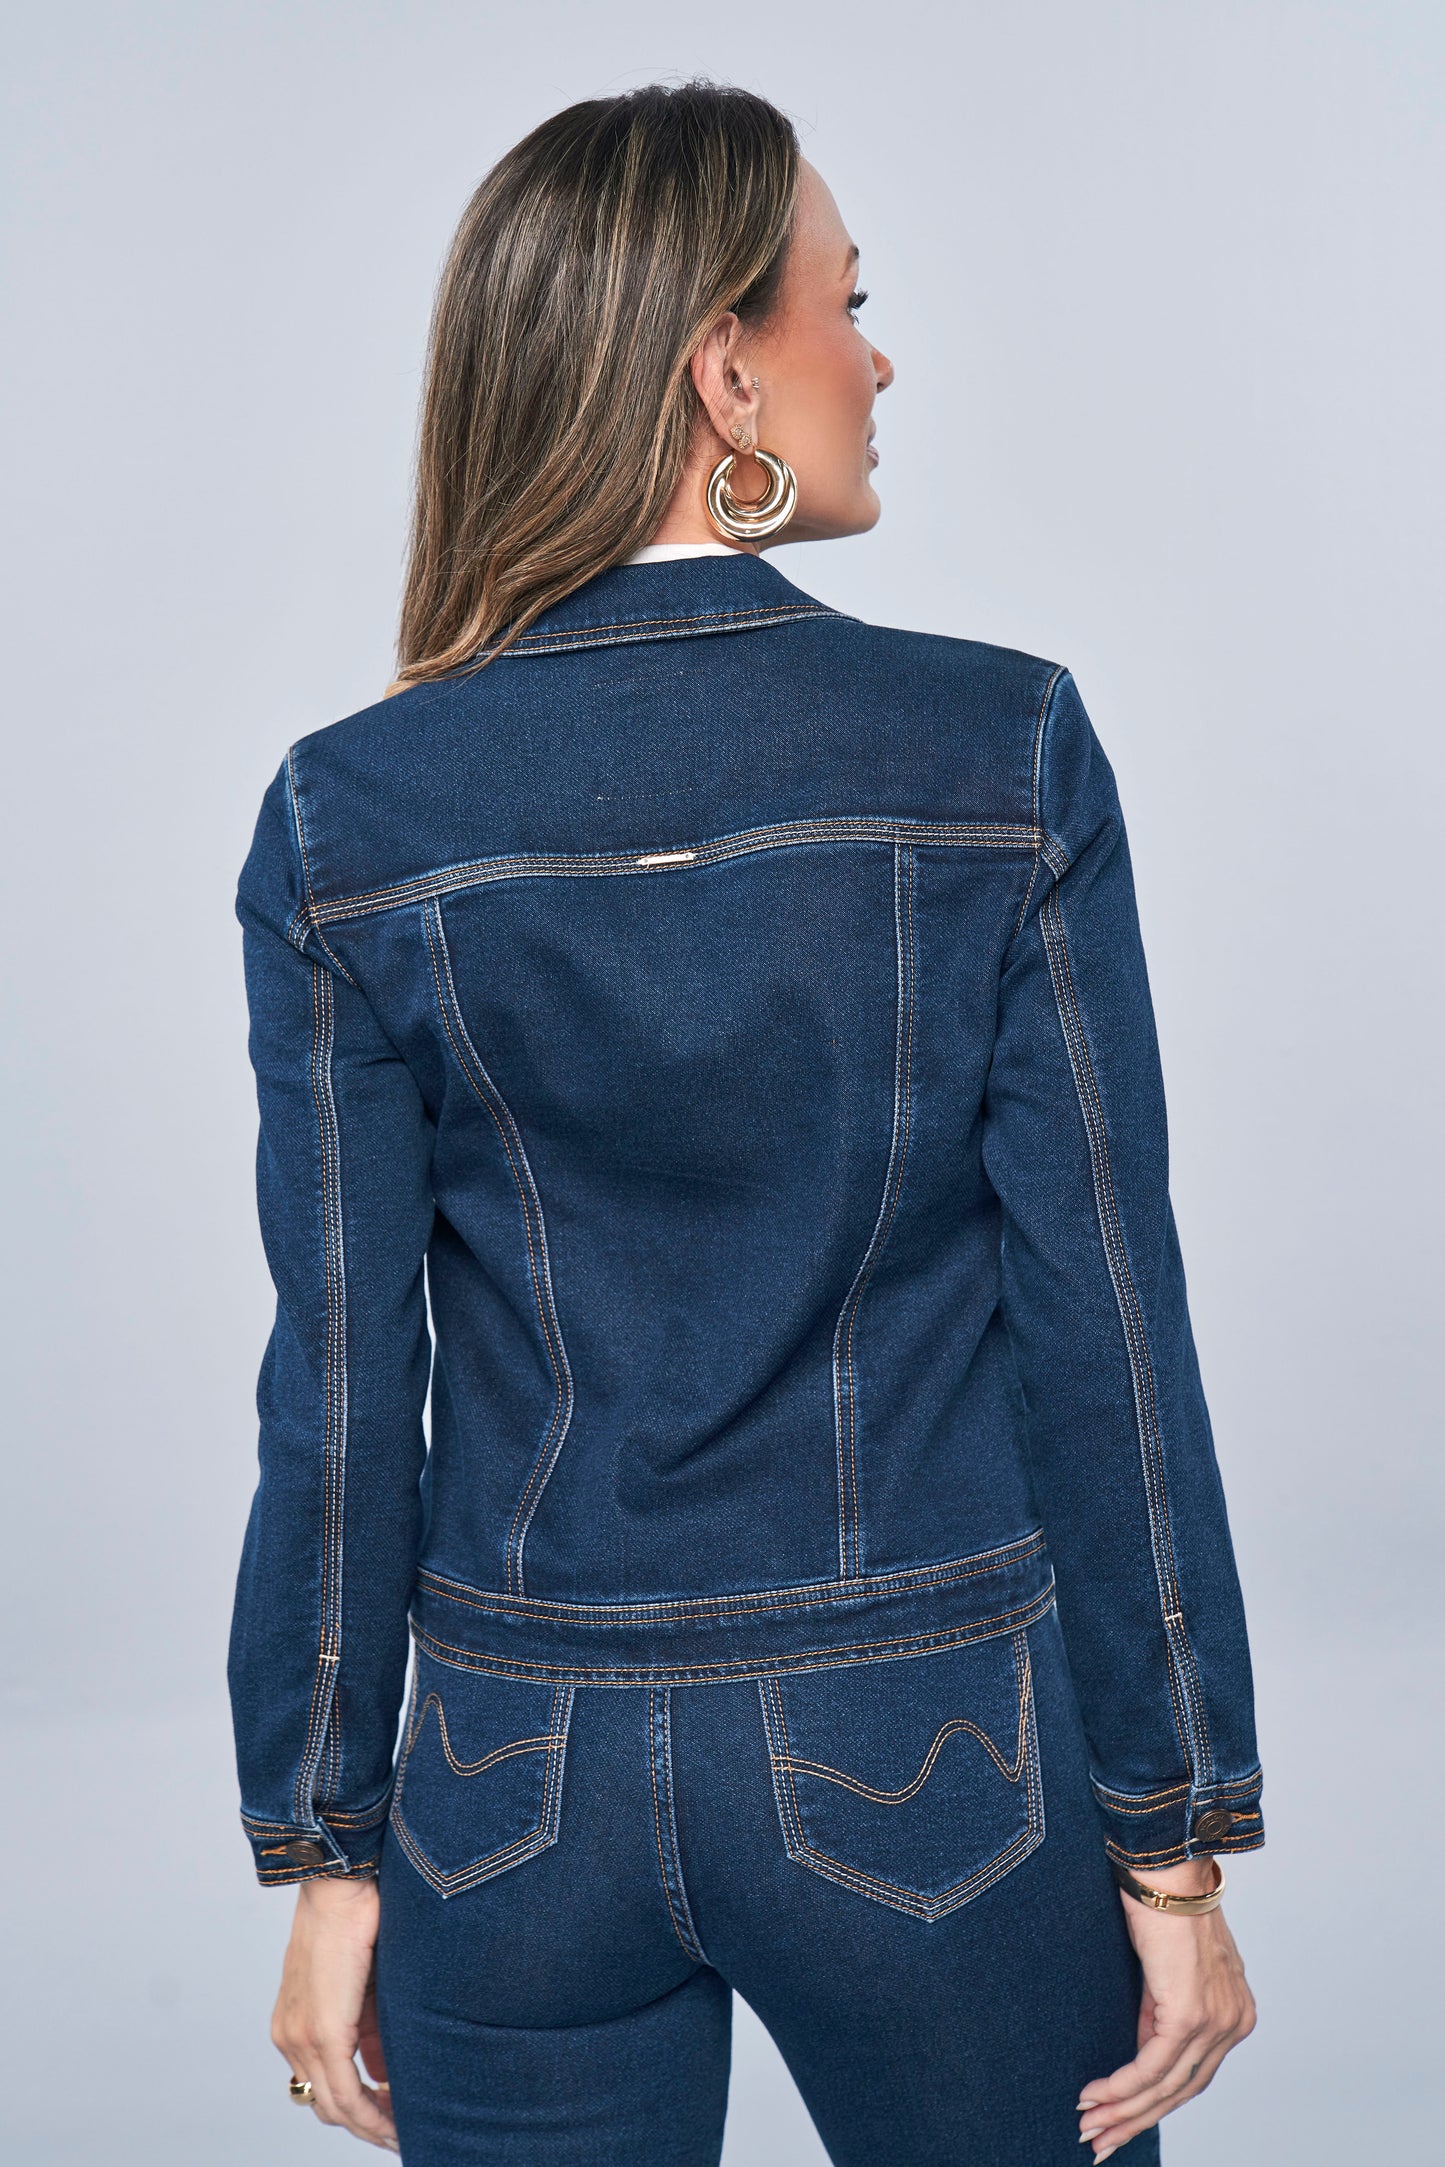 jaqueta jeans malha manga longa